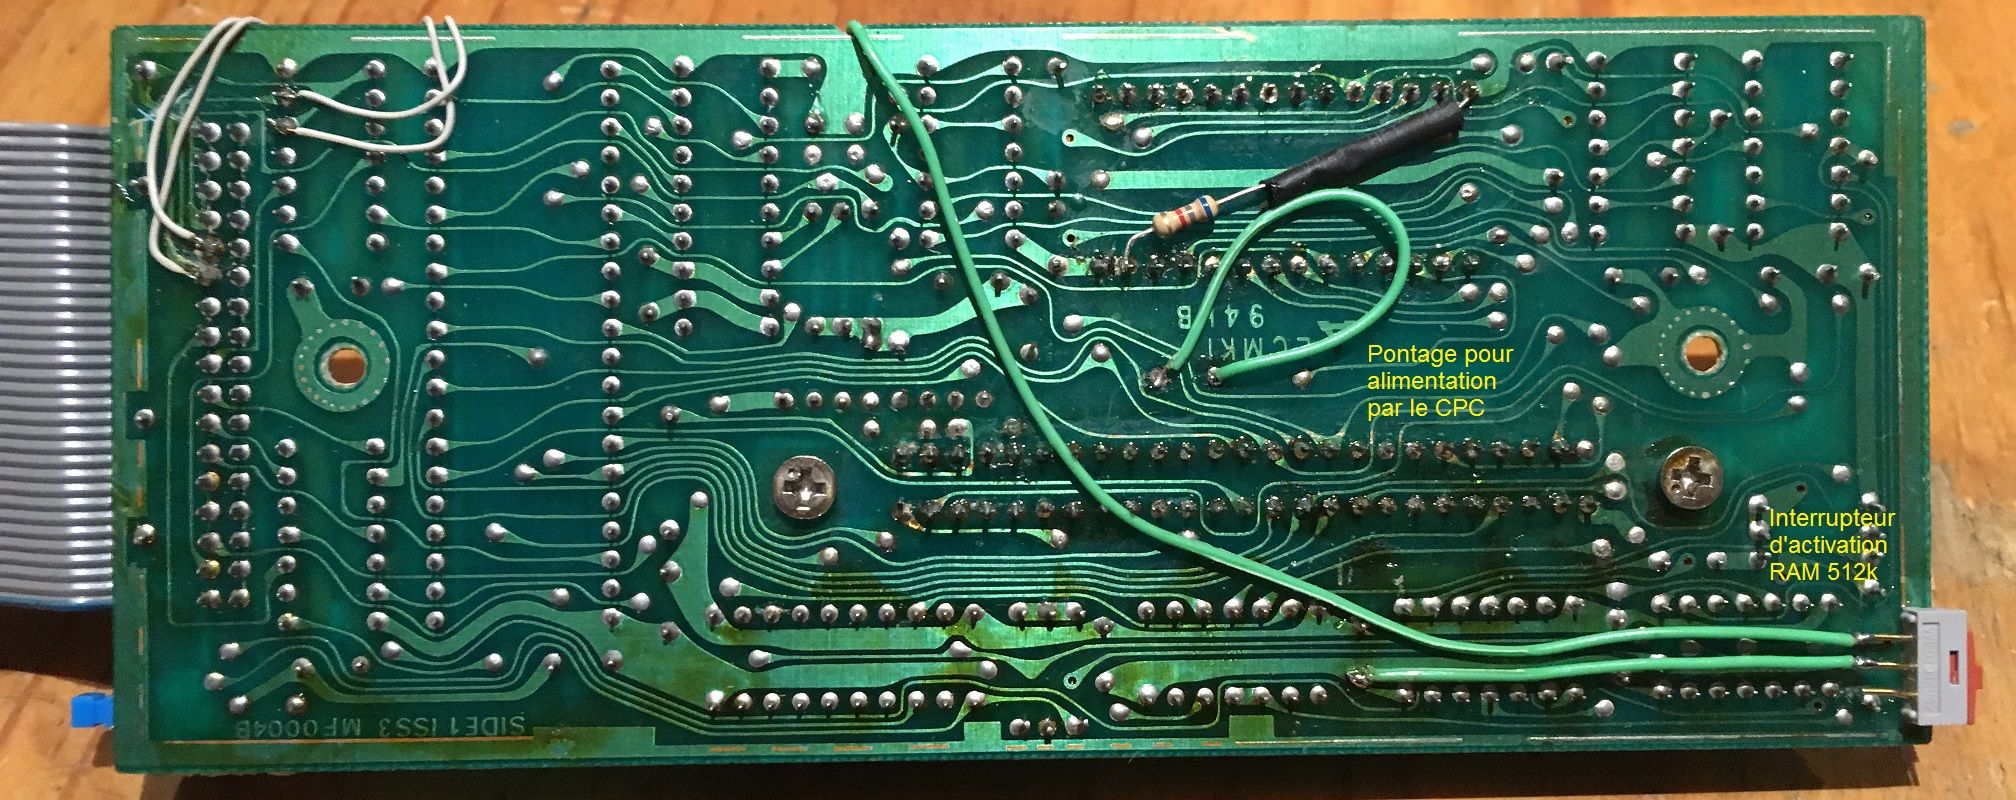 dos de l'interface Amstrad CPC DDI-1 modifiée